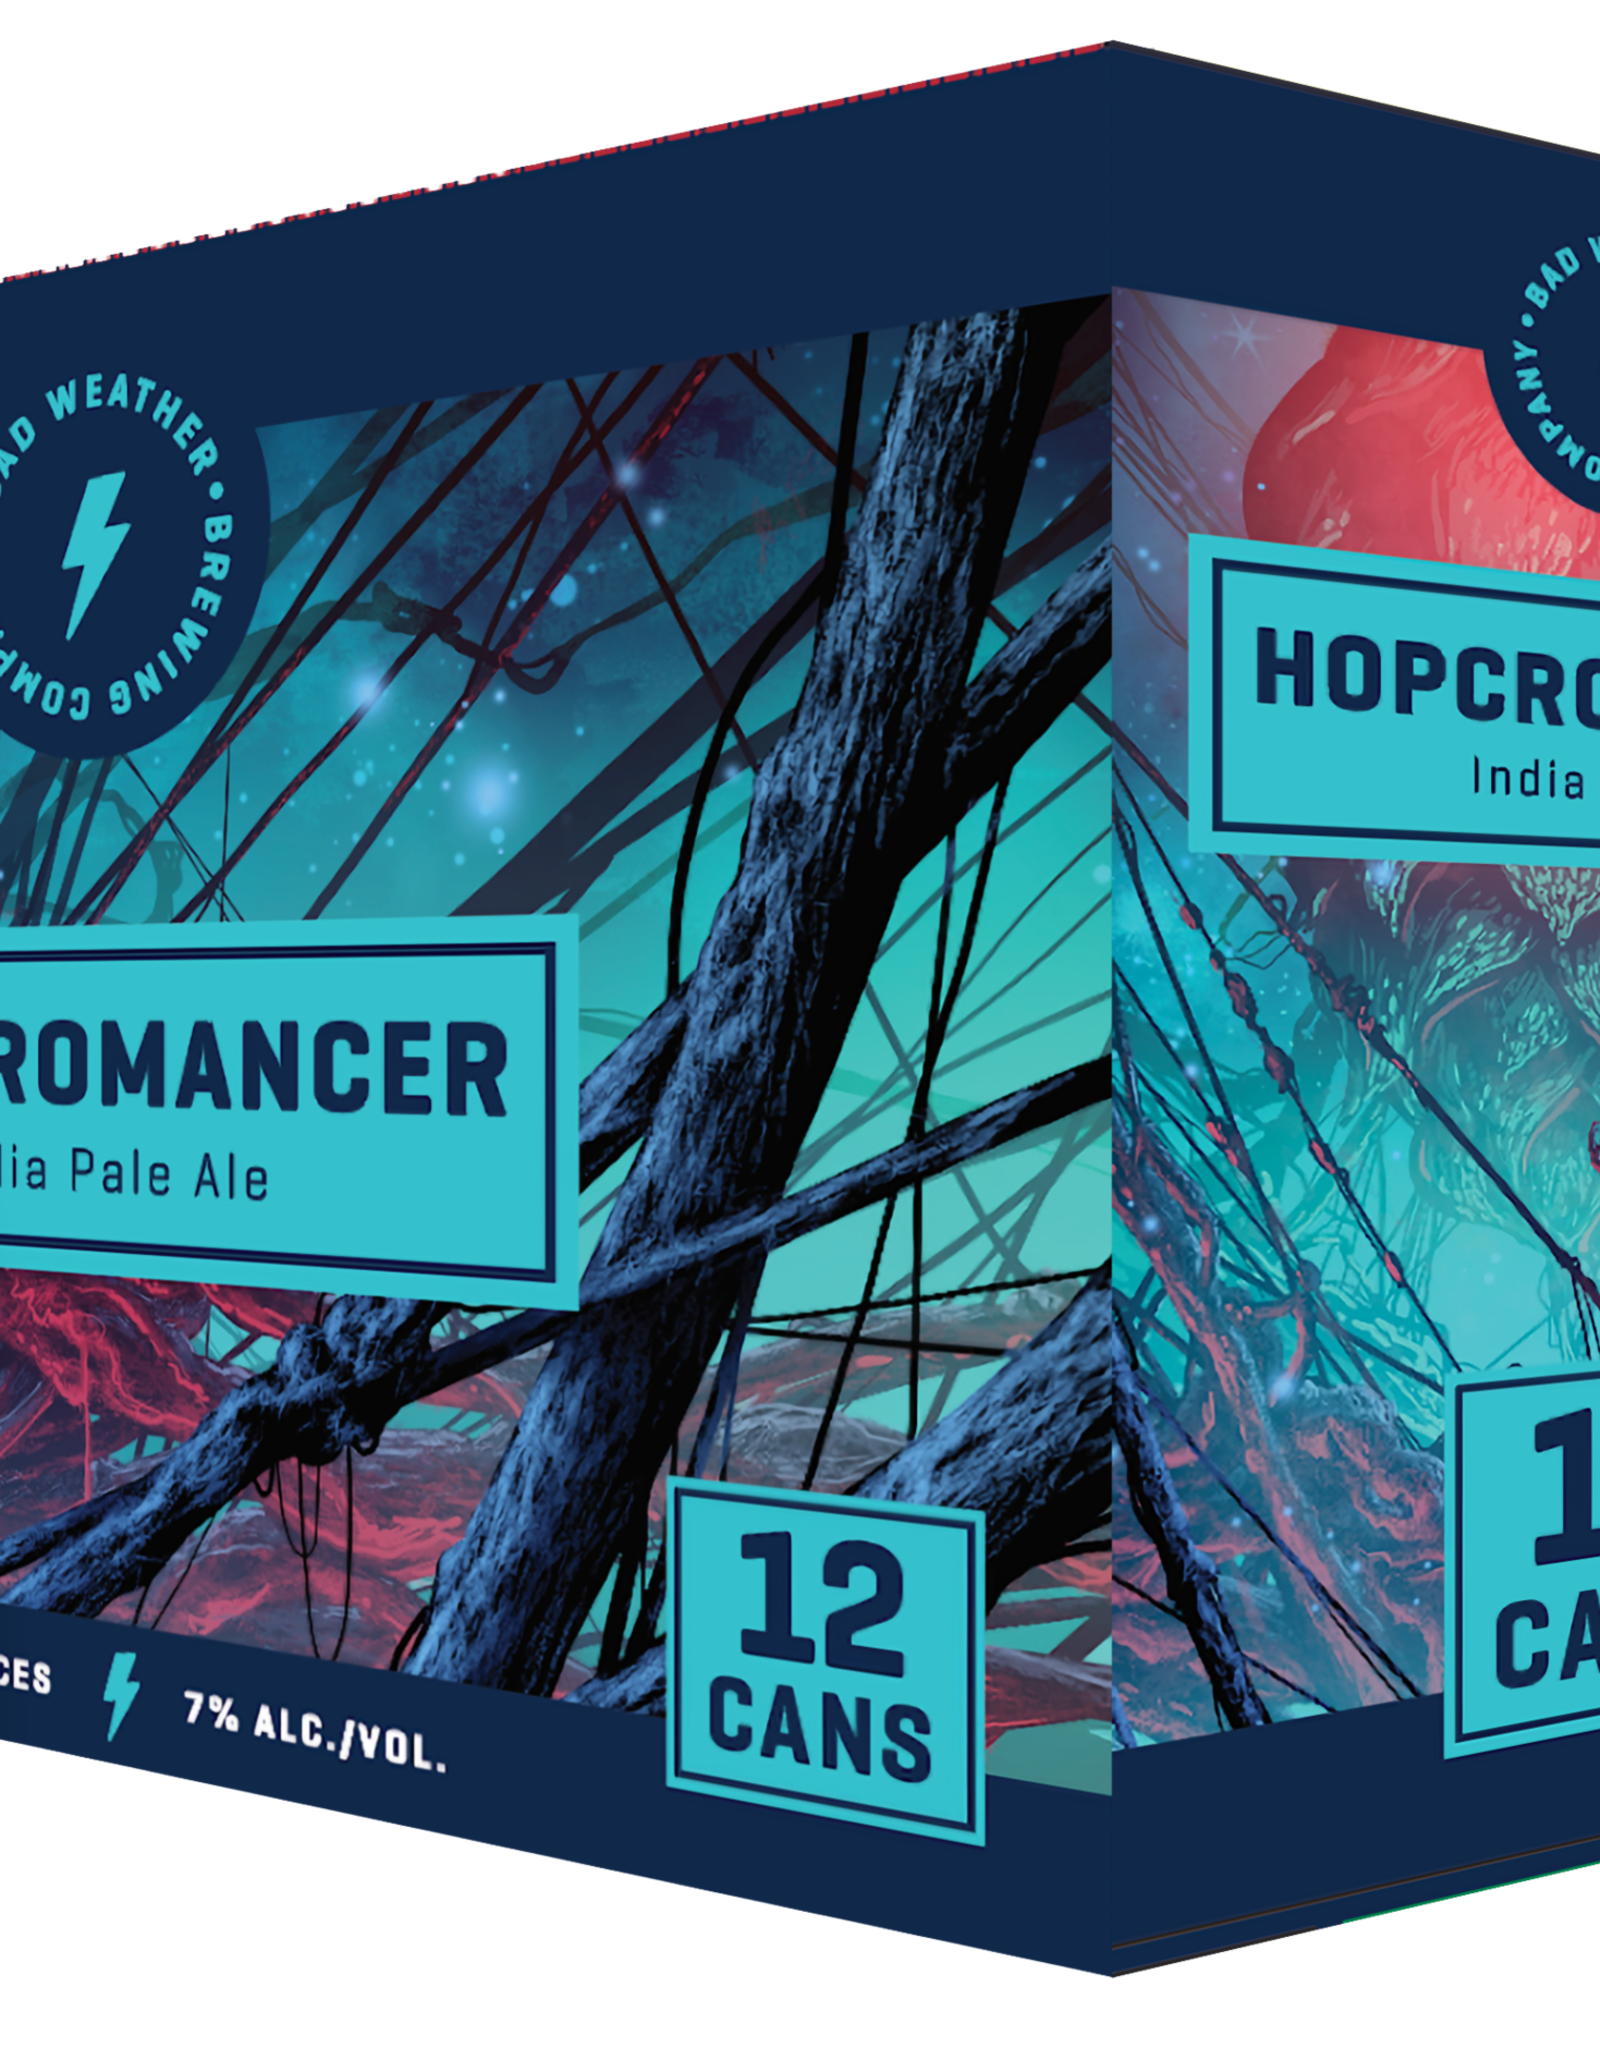 Bad Weather Hopcromancer 12x12 oz cans